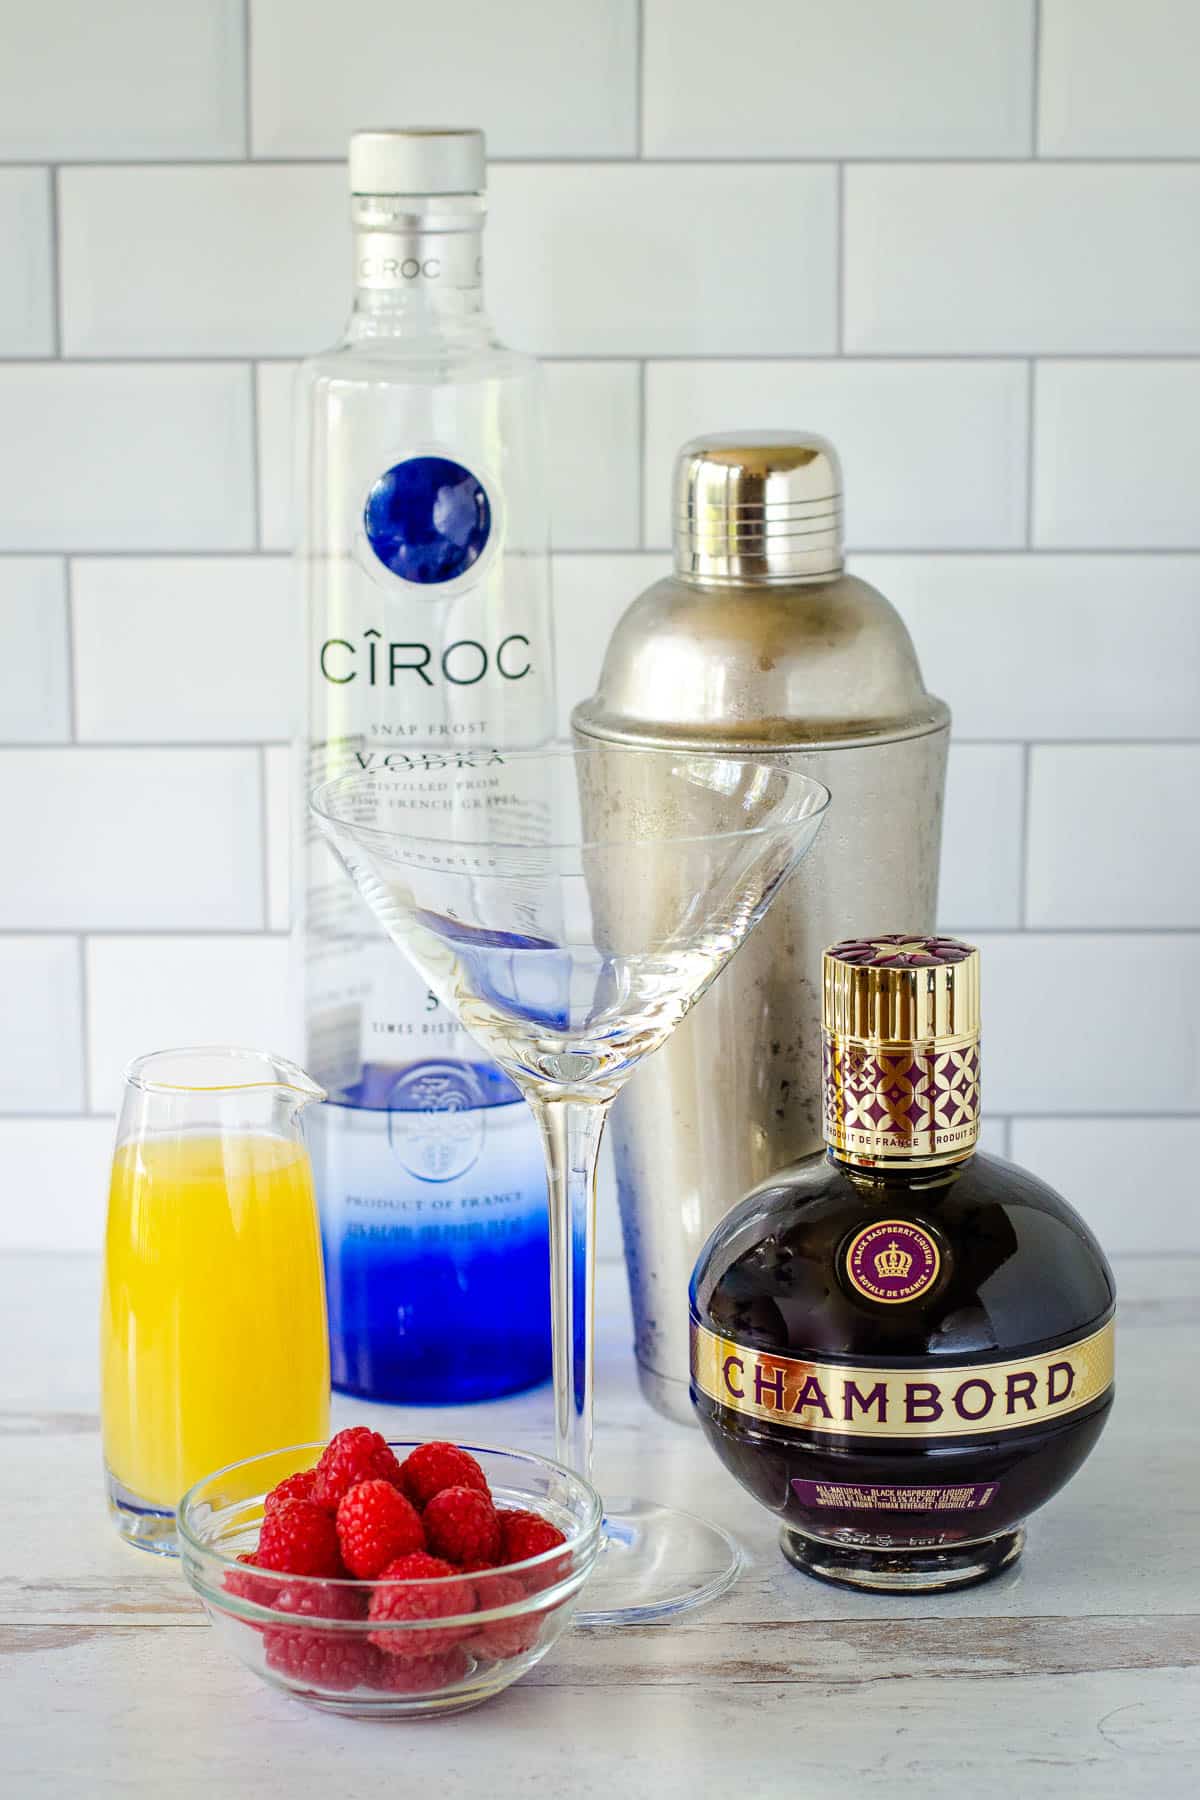 Vodka, cocktail shaker, Chambord liqueur, pineapple juice, martini glass, raspberries